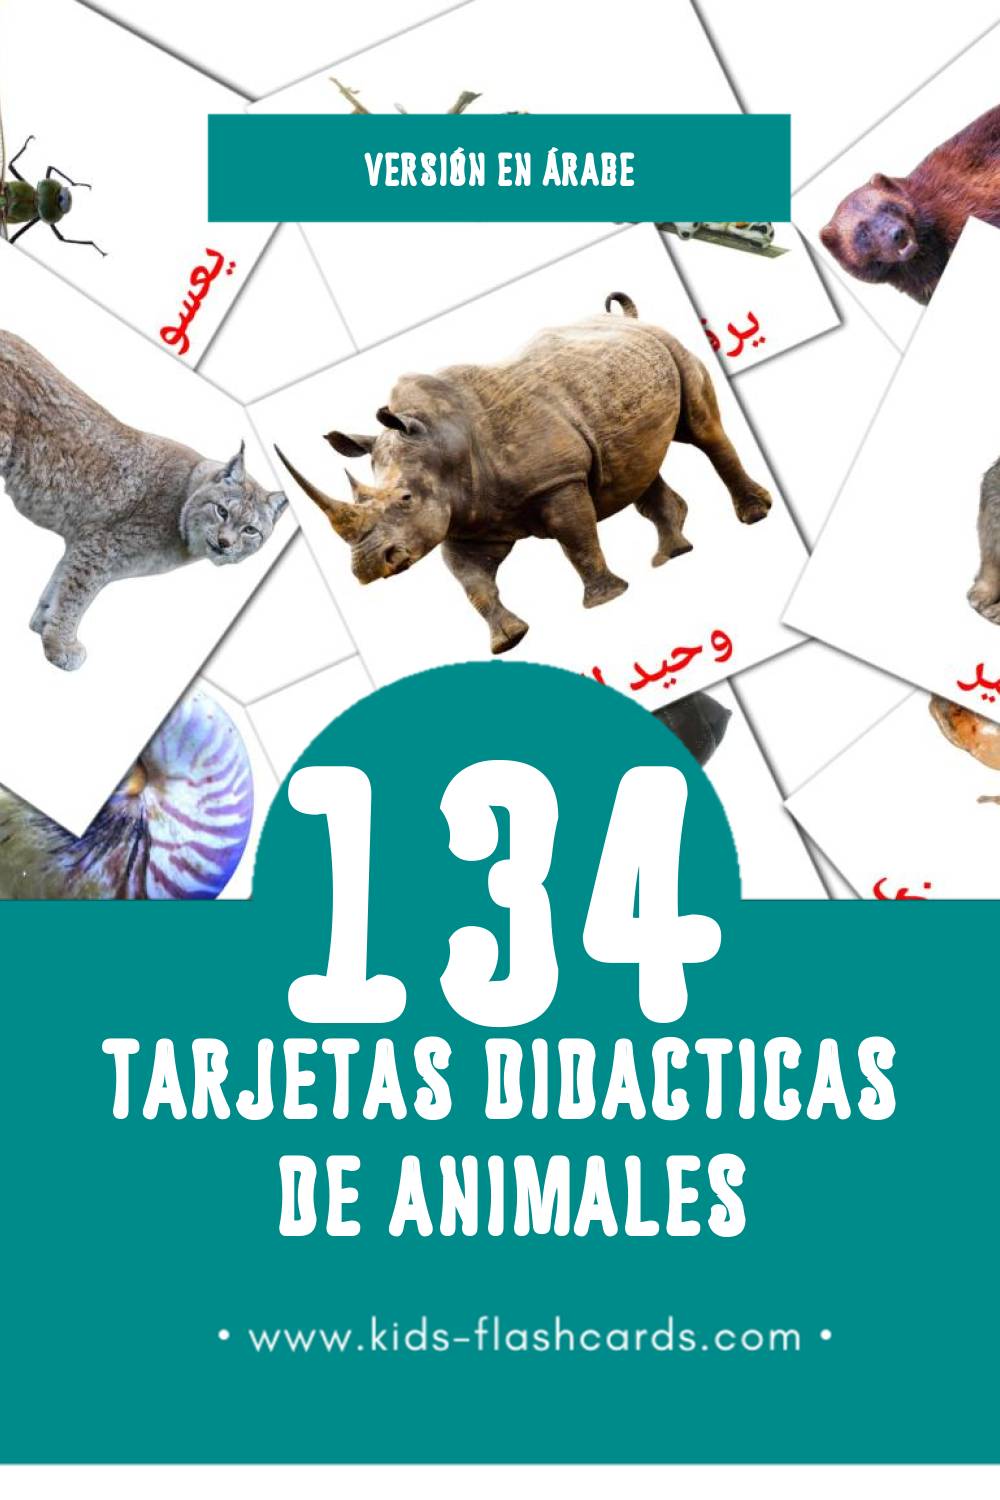 Tarjetas visuales de حيوانات برية para niños pequeños (134 tarjetas en Árabe)